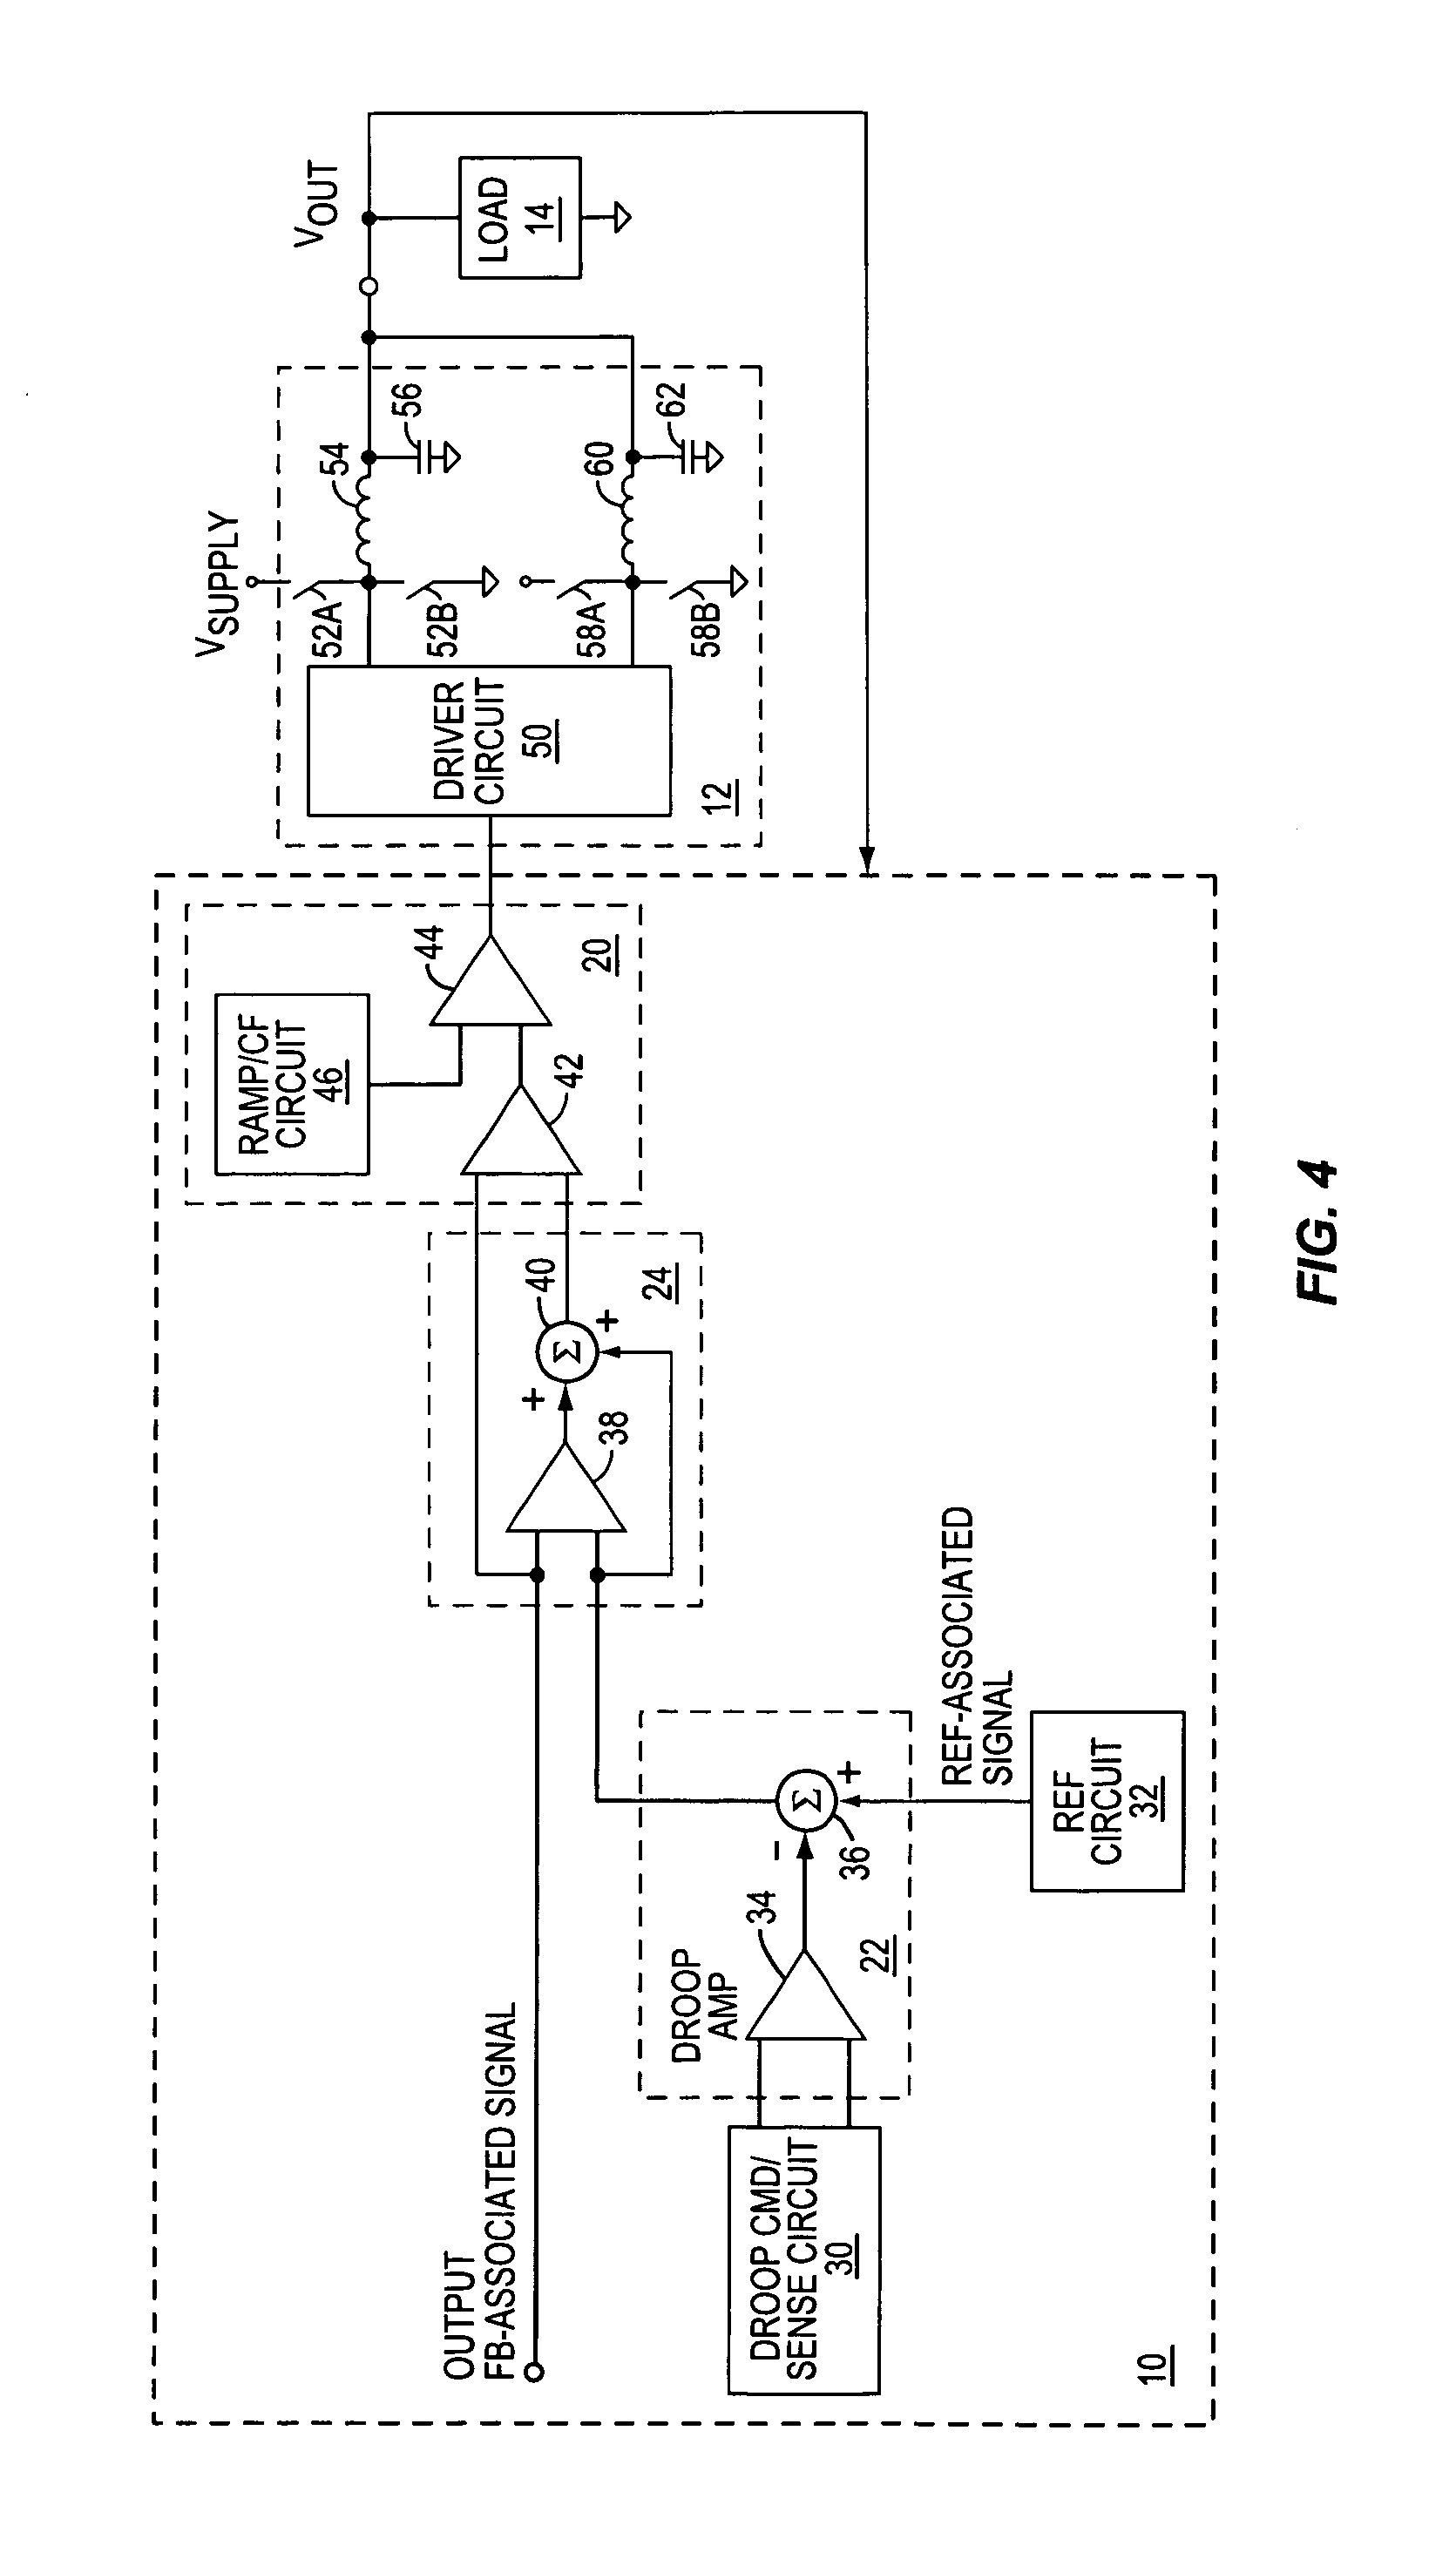 Method and apparatus for enhancing voltage regulator transient response